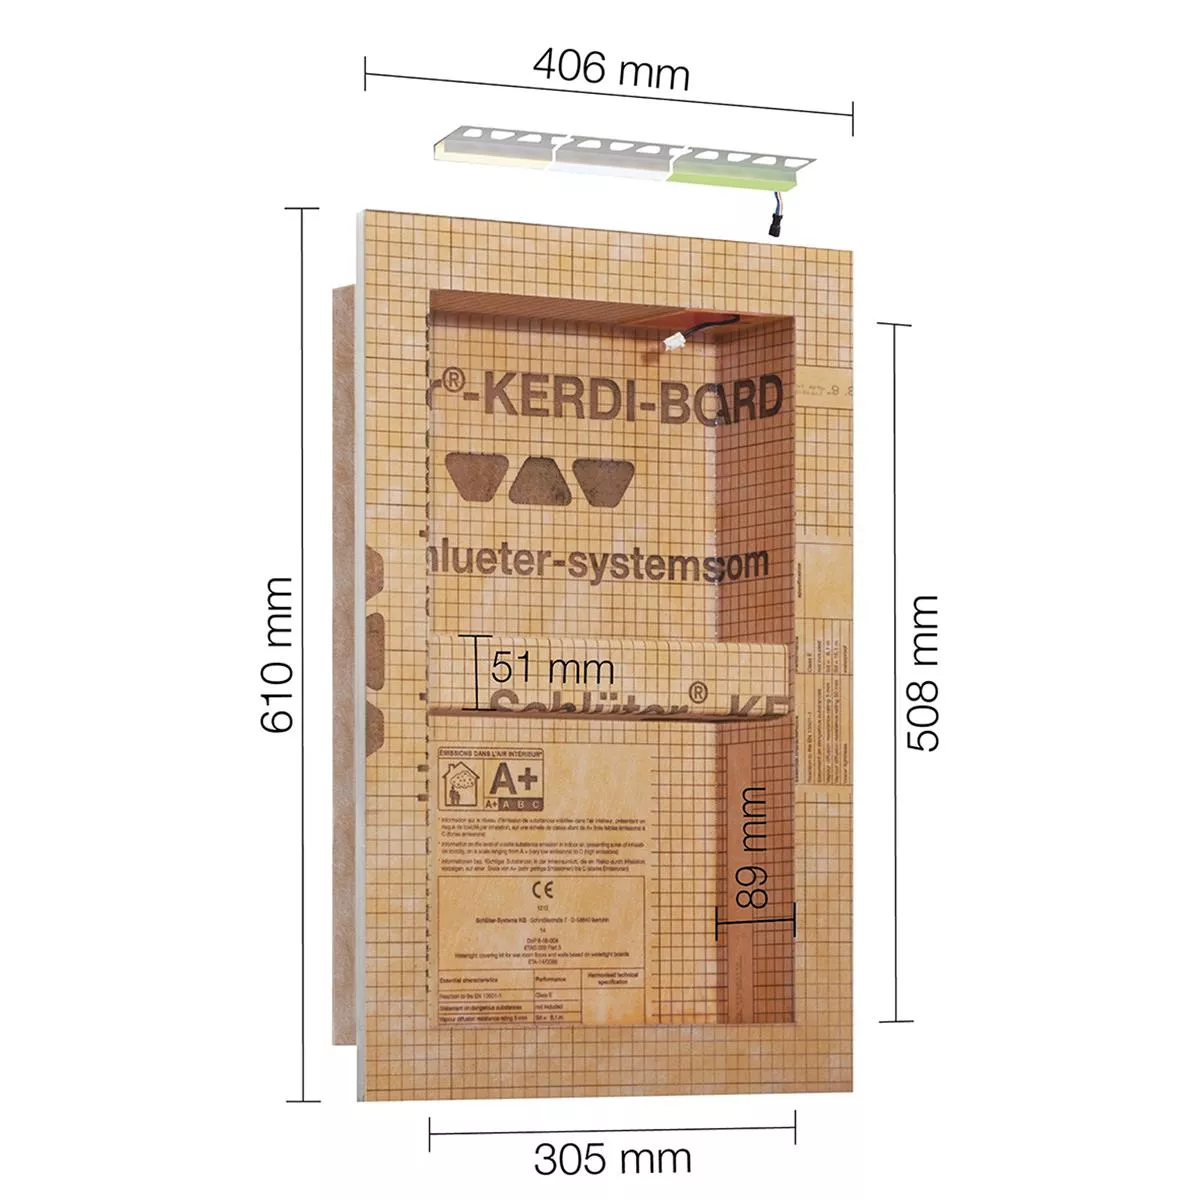 Schlüter Kerdi Board NLT nischset LED-belysning RGB 30,5x50,8x0,89 cm